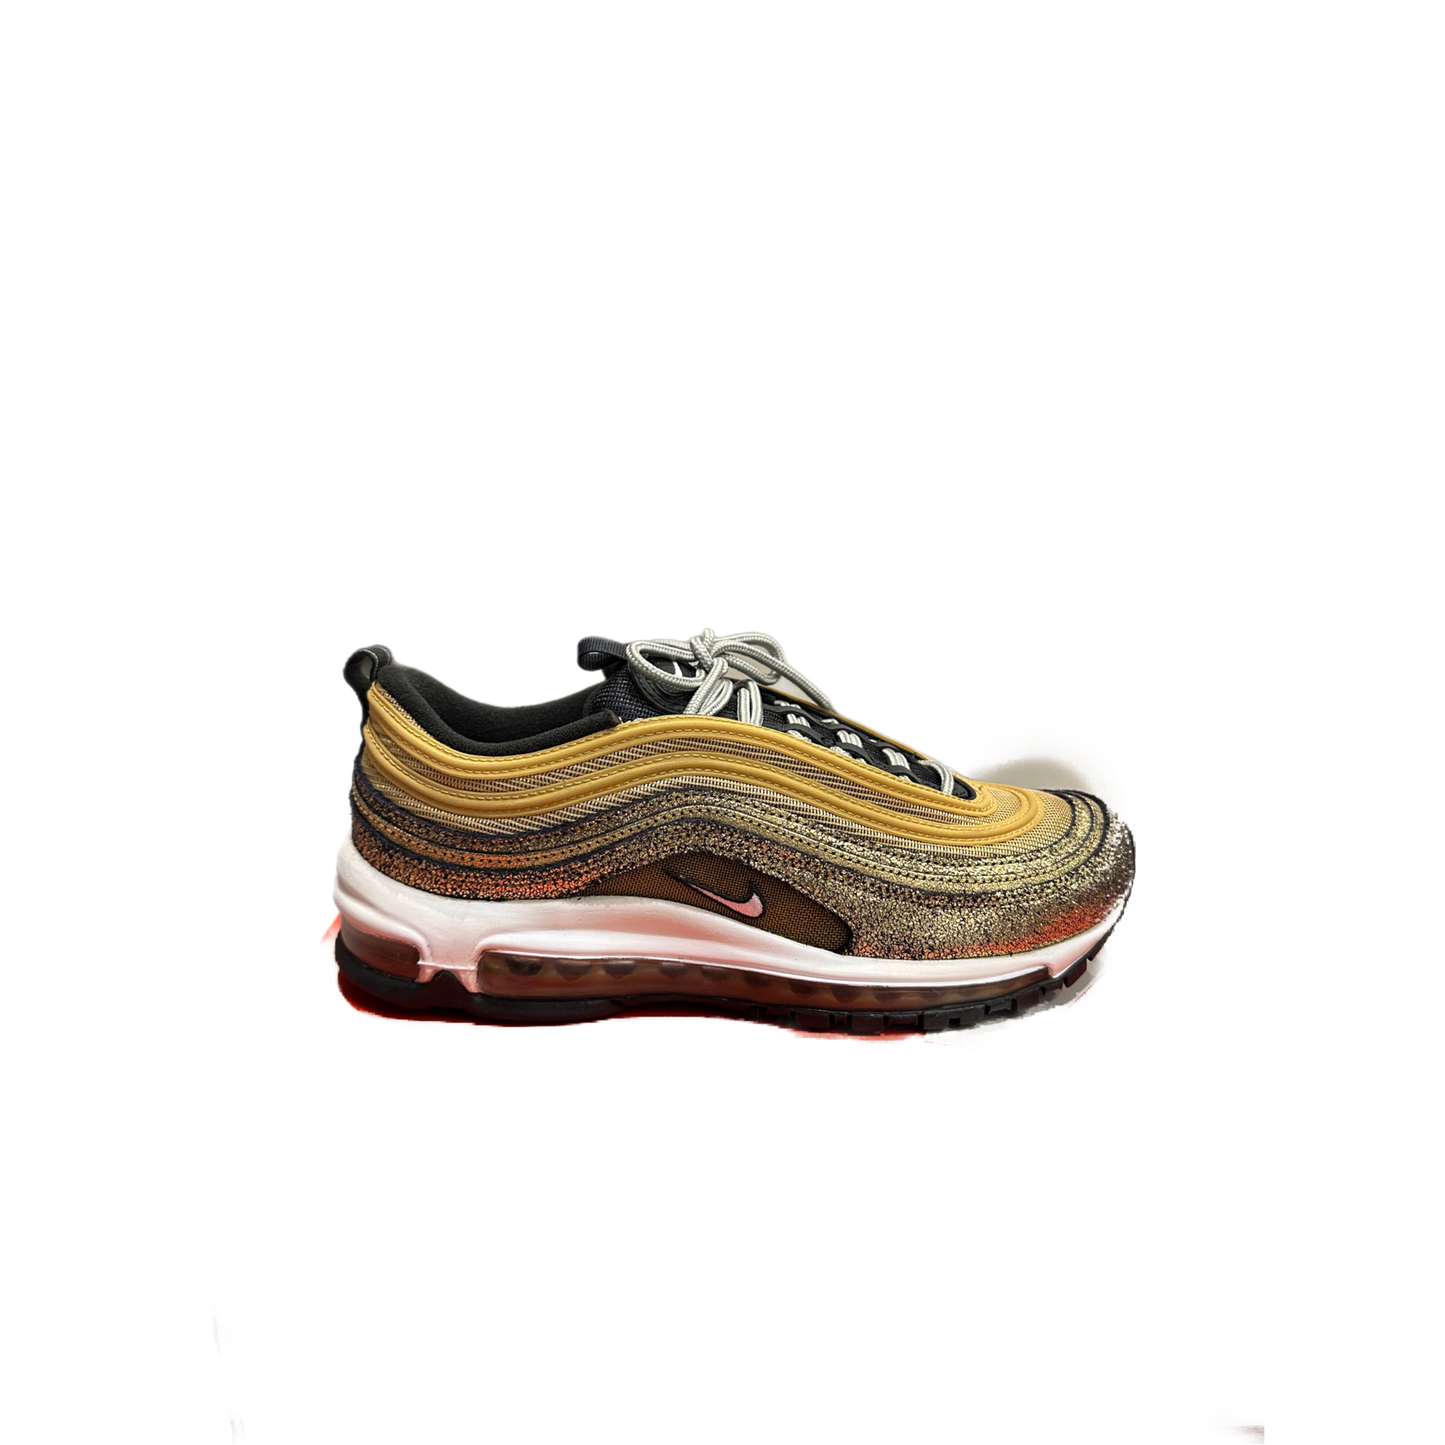 Nike - "Air Max 97 Metallic Gold" - Size 8